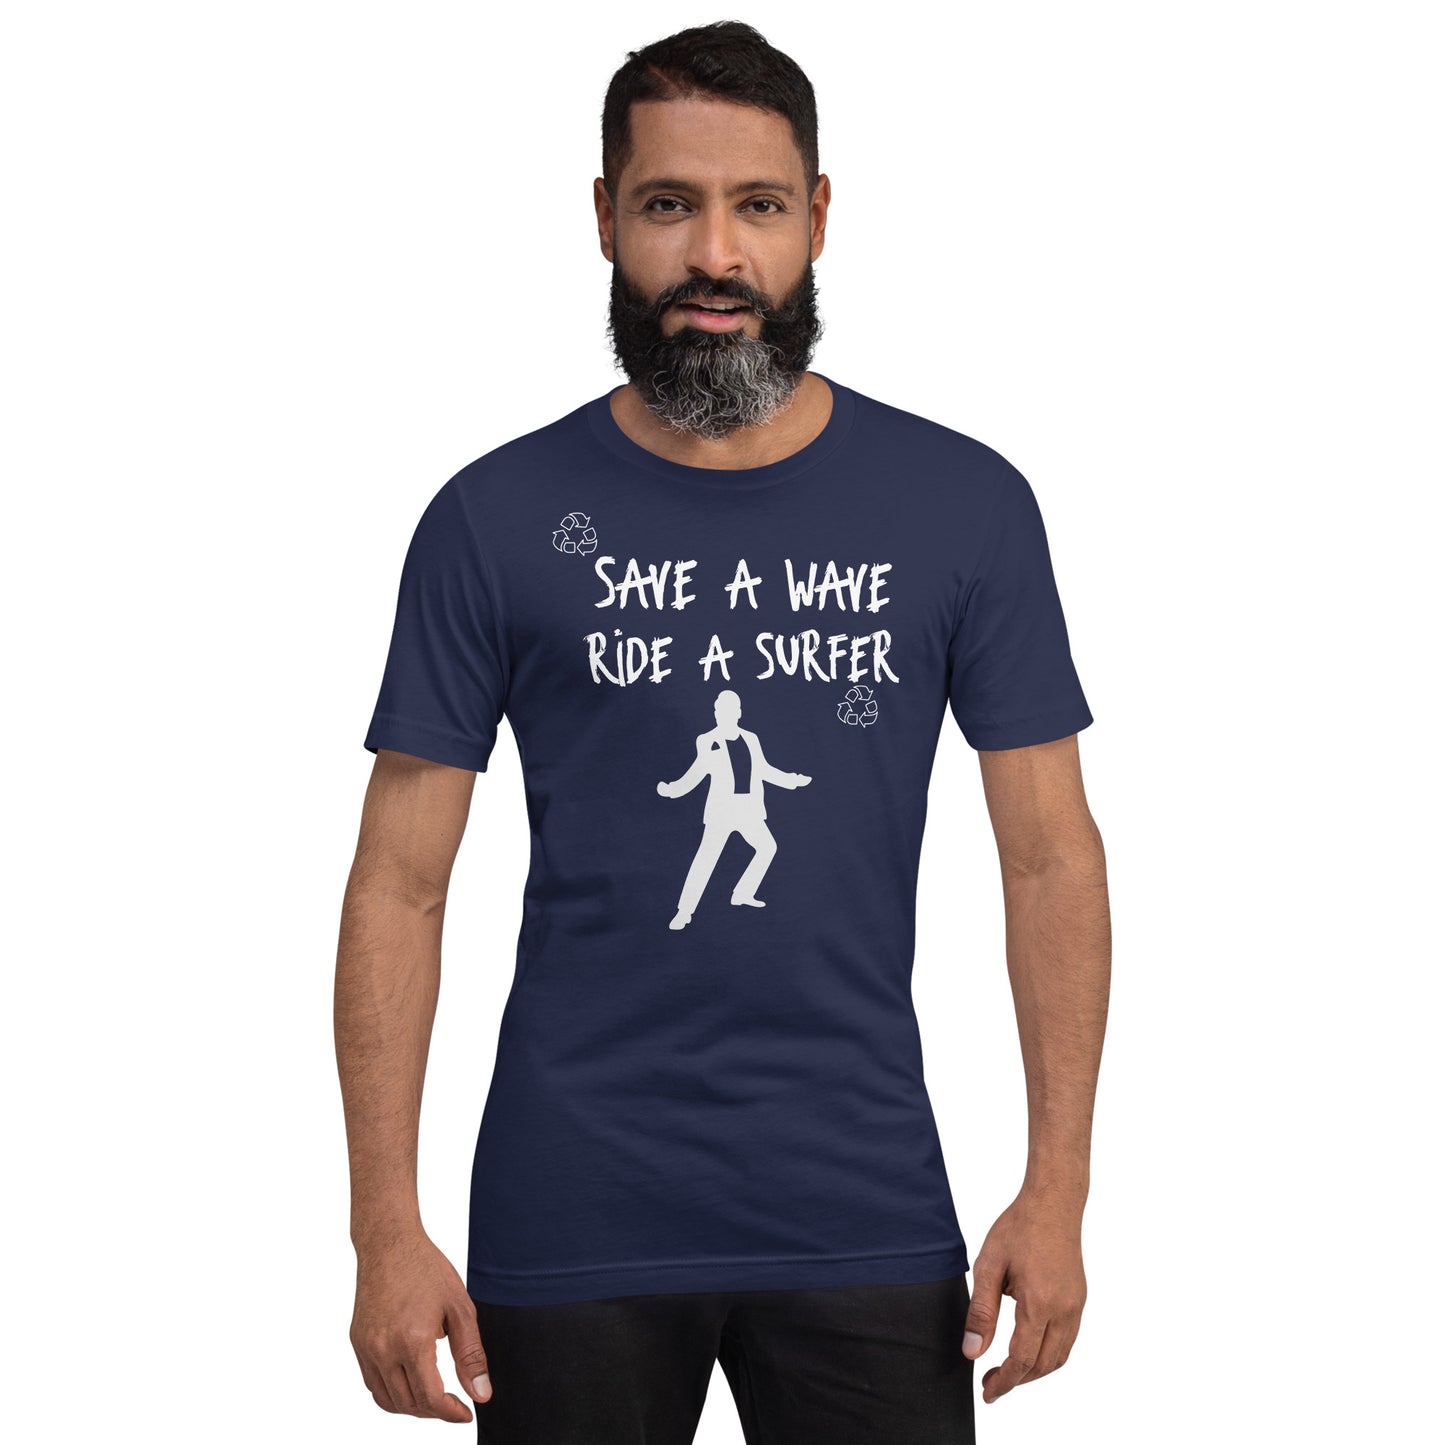 Save a wave ride a surfer- Unisex t-shirt